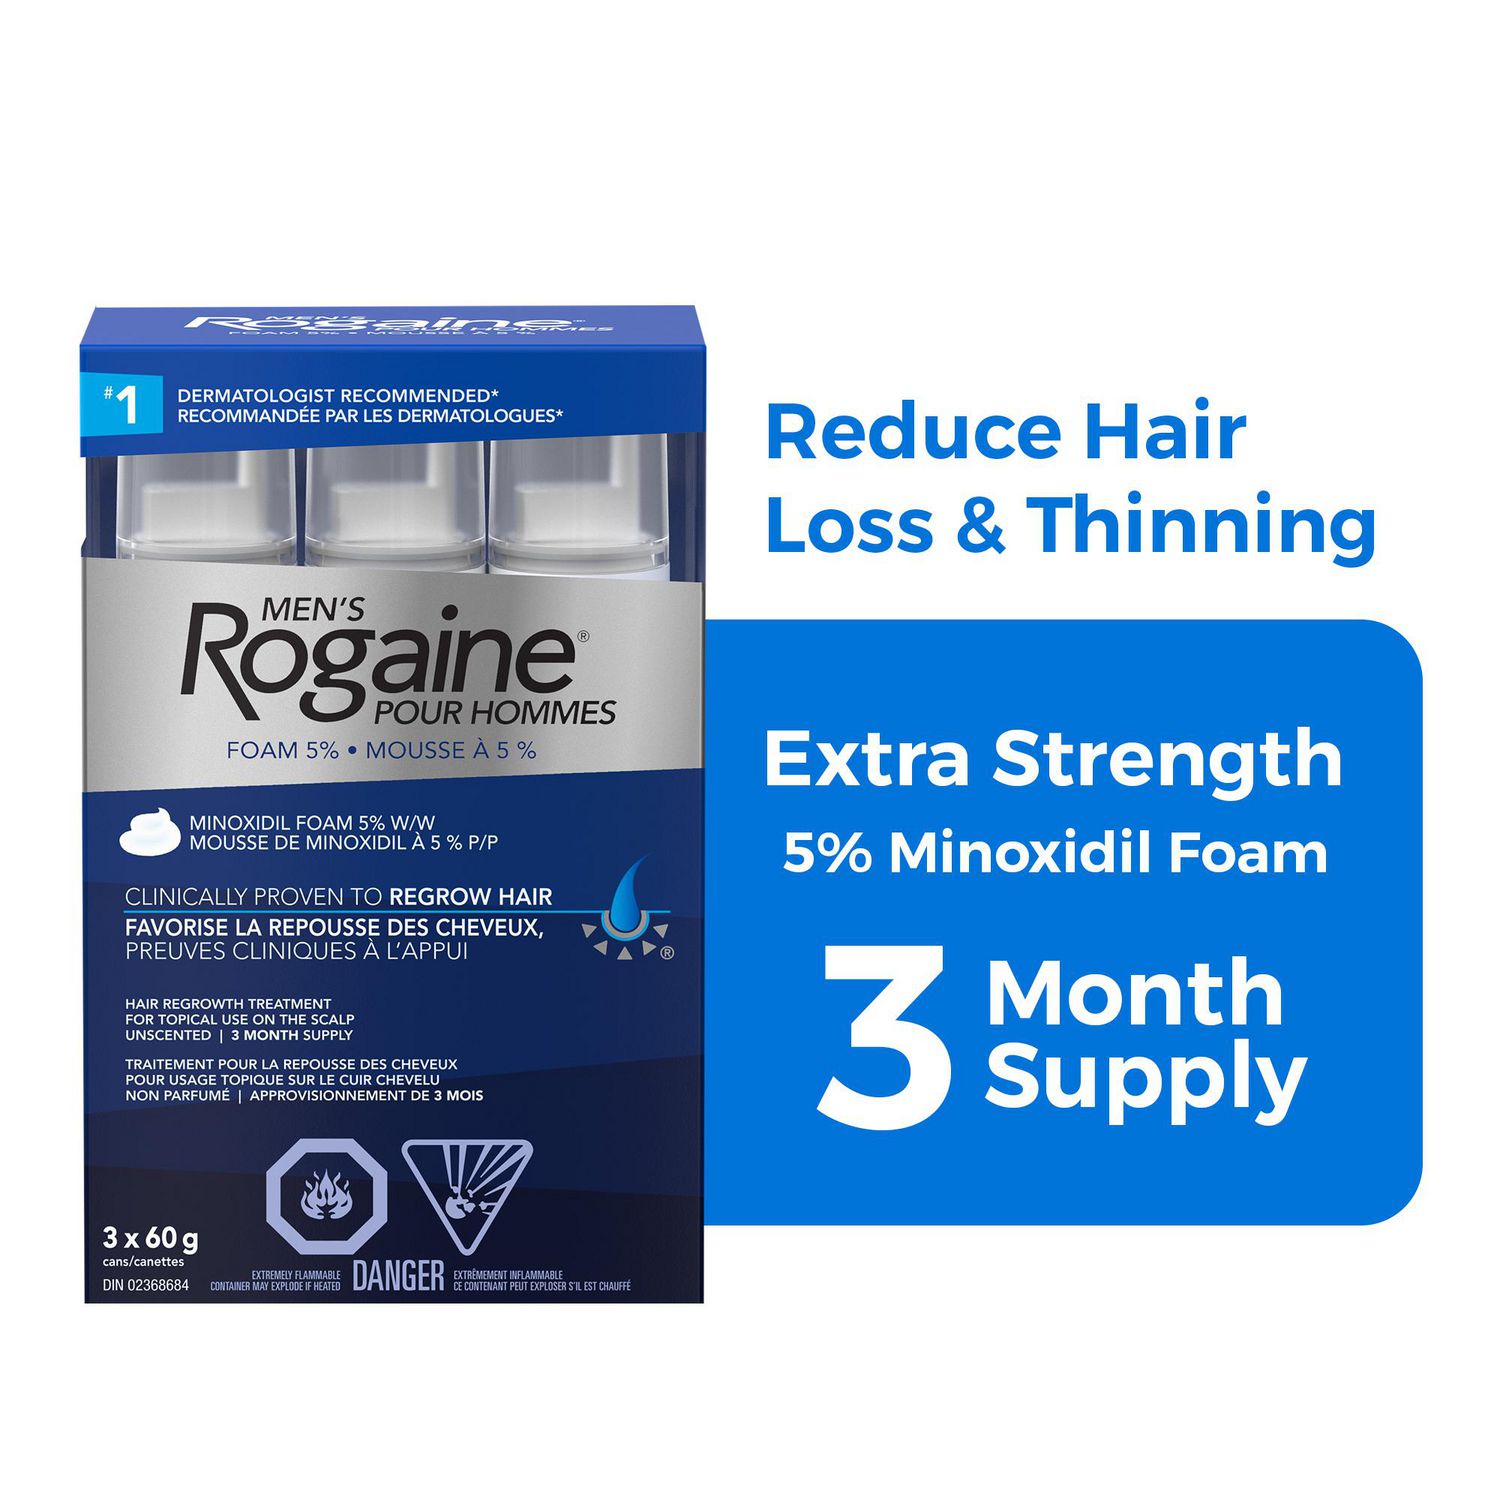 Rogaine Hair Growth Treatment for Men - Reduce Hair Loss & Thinning - 5%  Minoxidil Foam - 3 Month Supply, 3x 60g. | Walmart Canada